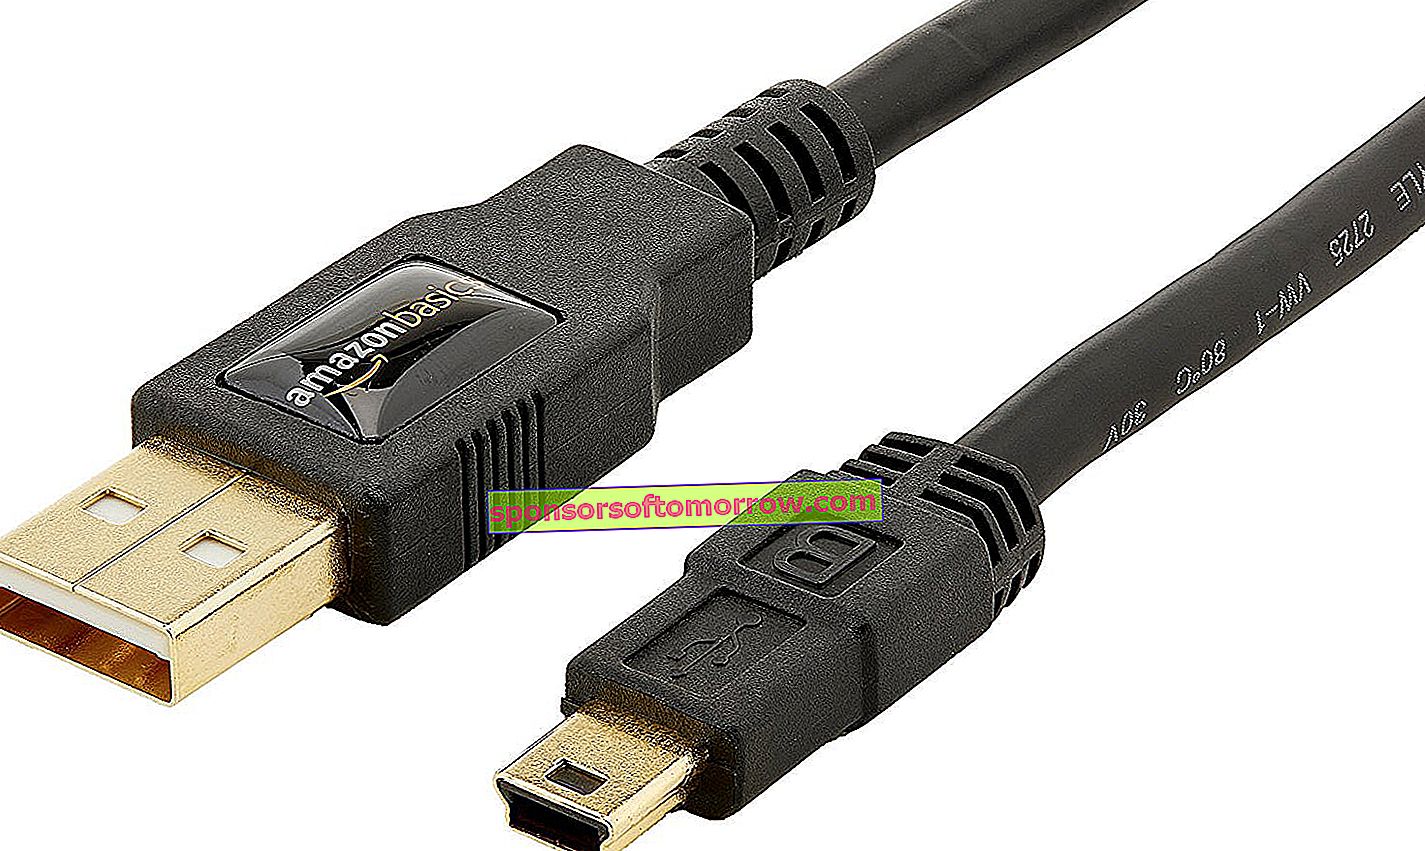 Mini B USB Cable